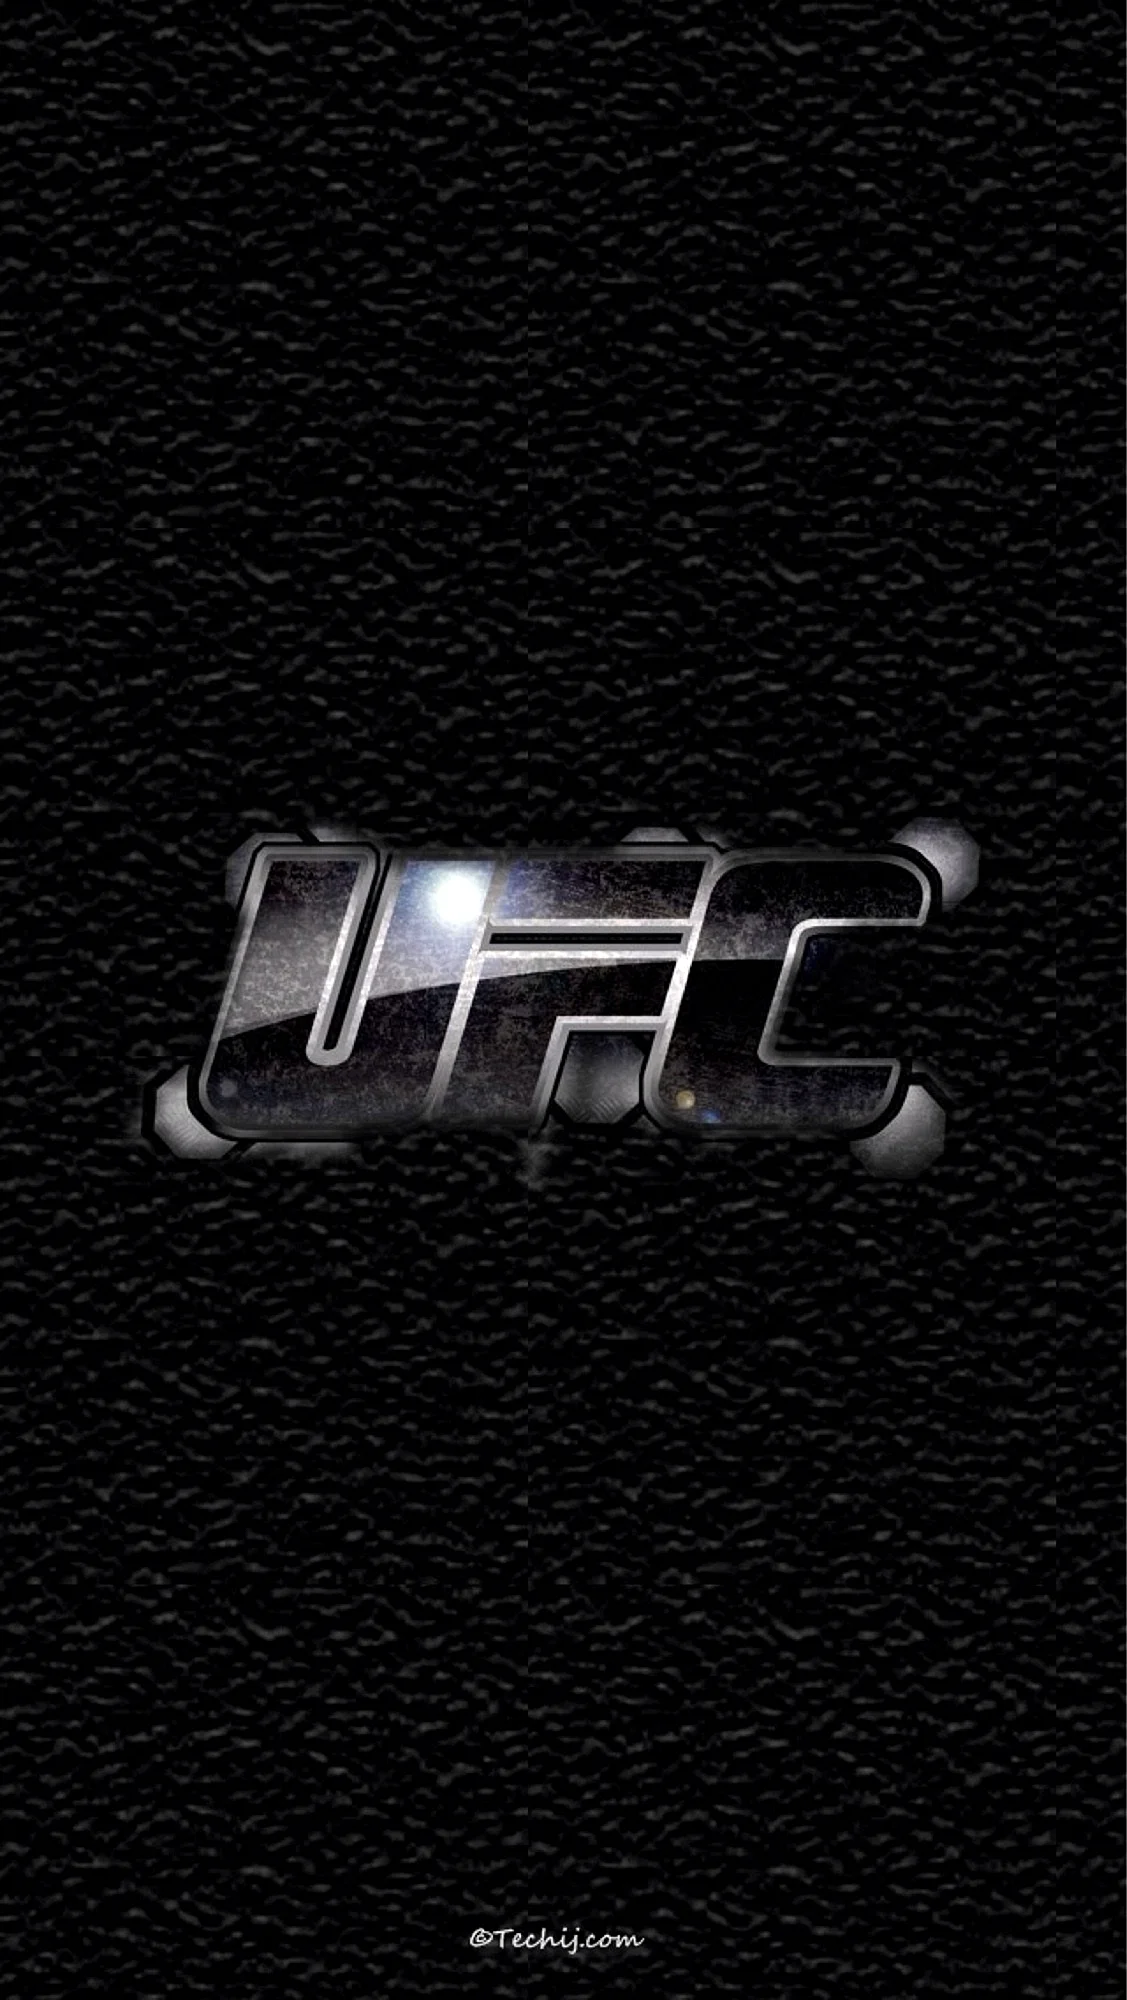 Ufc Logo Wallpaper For iPhone